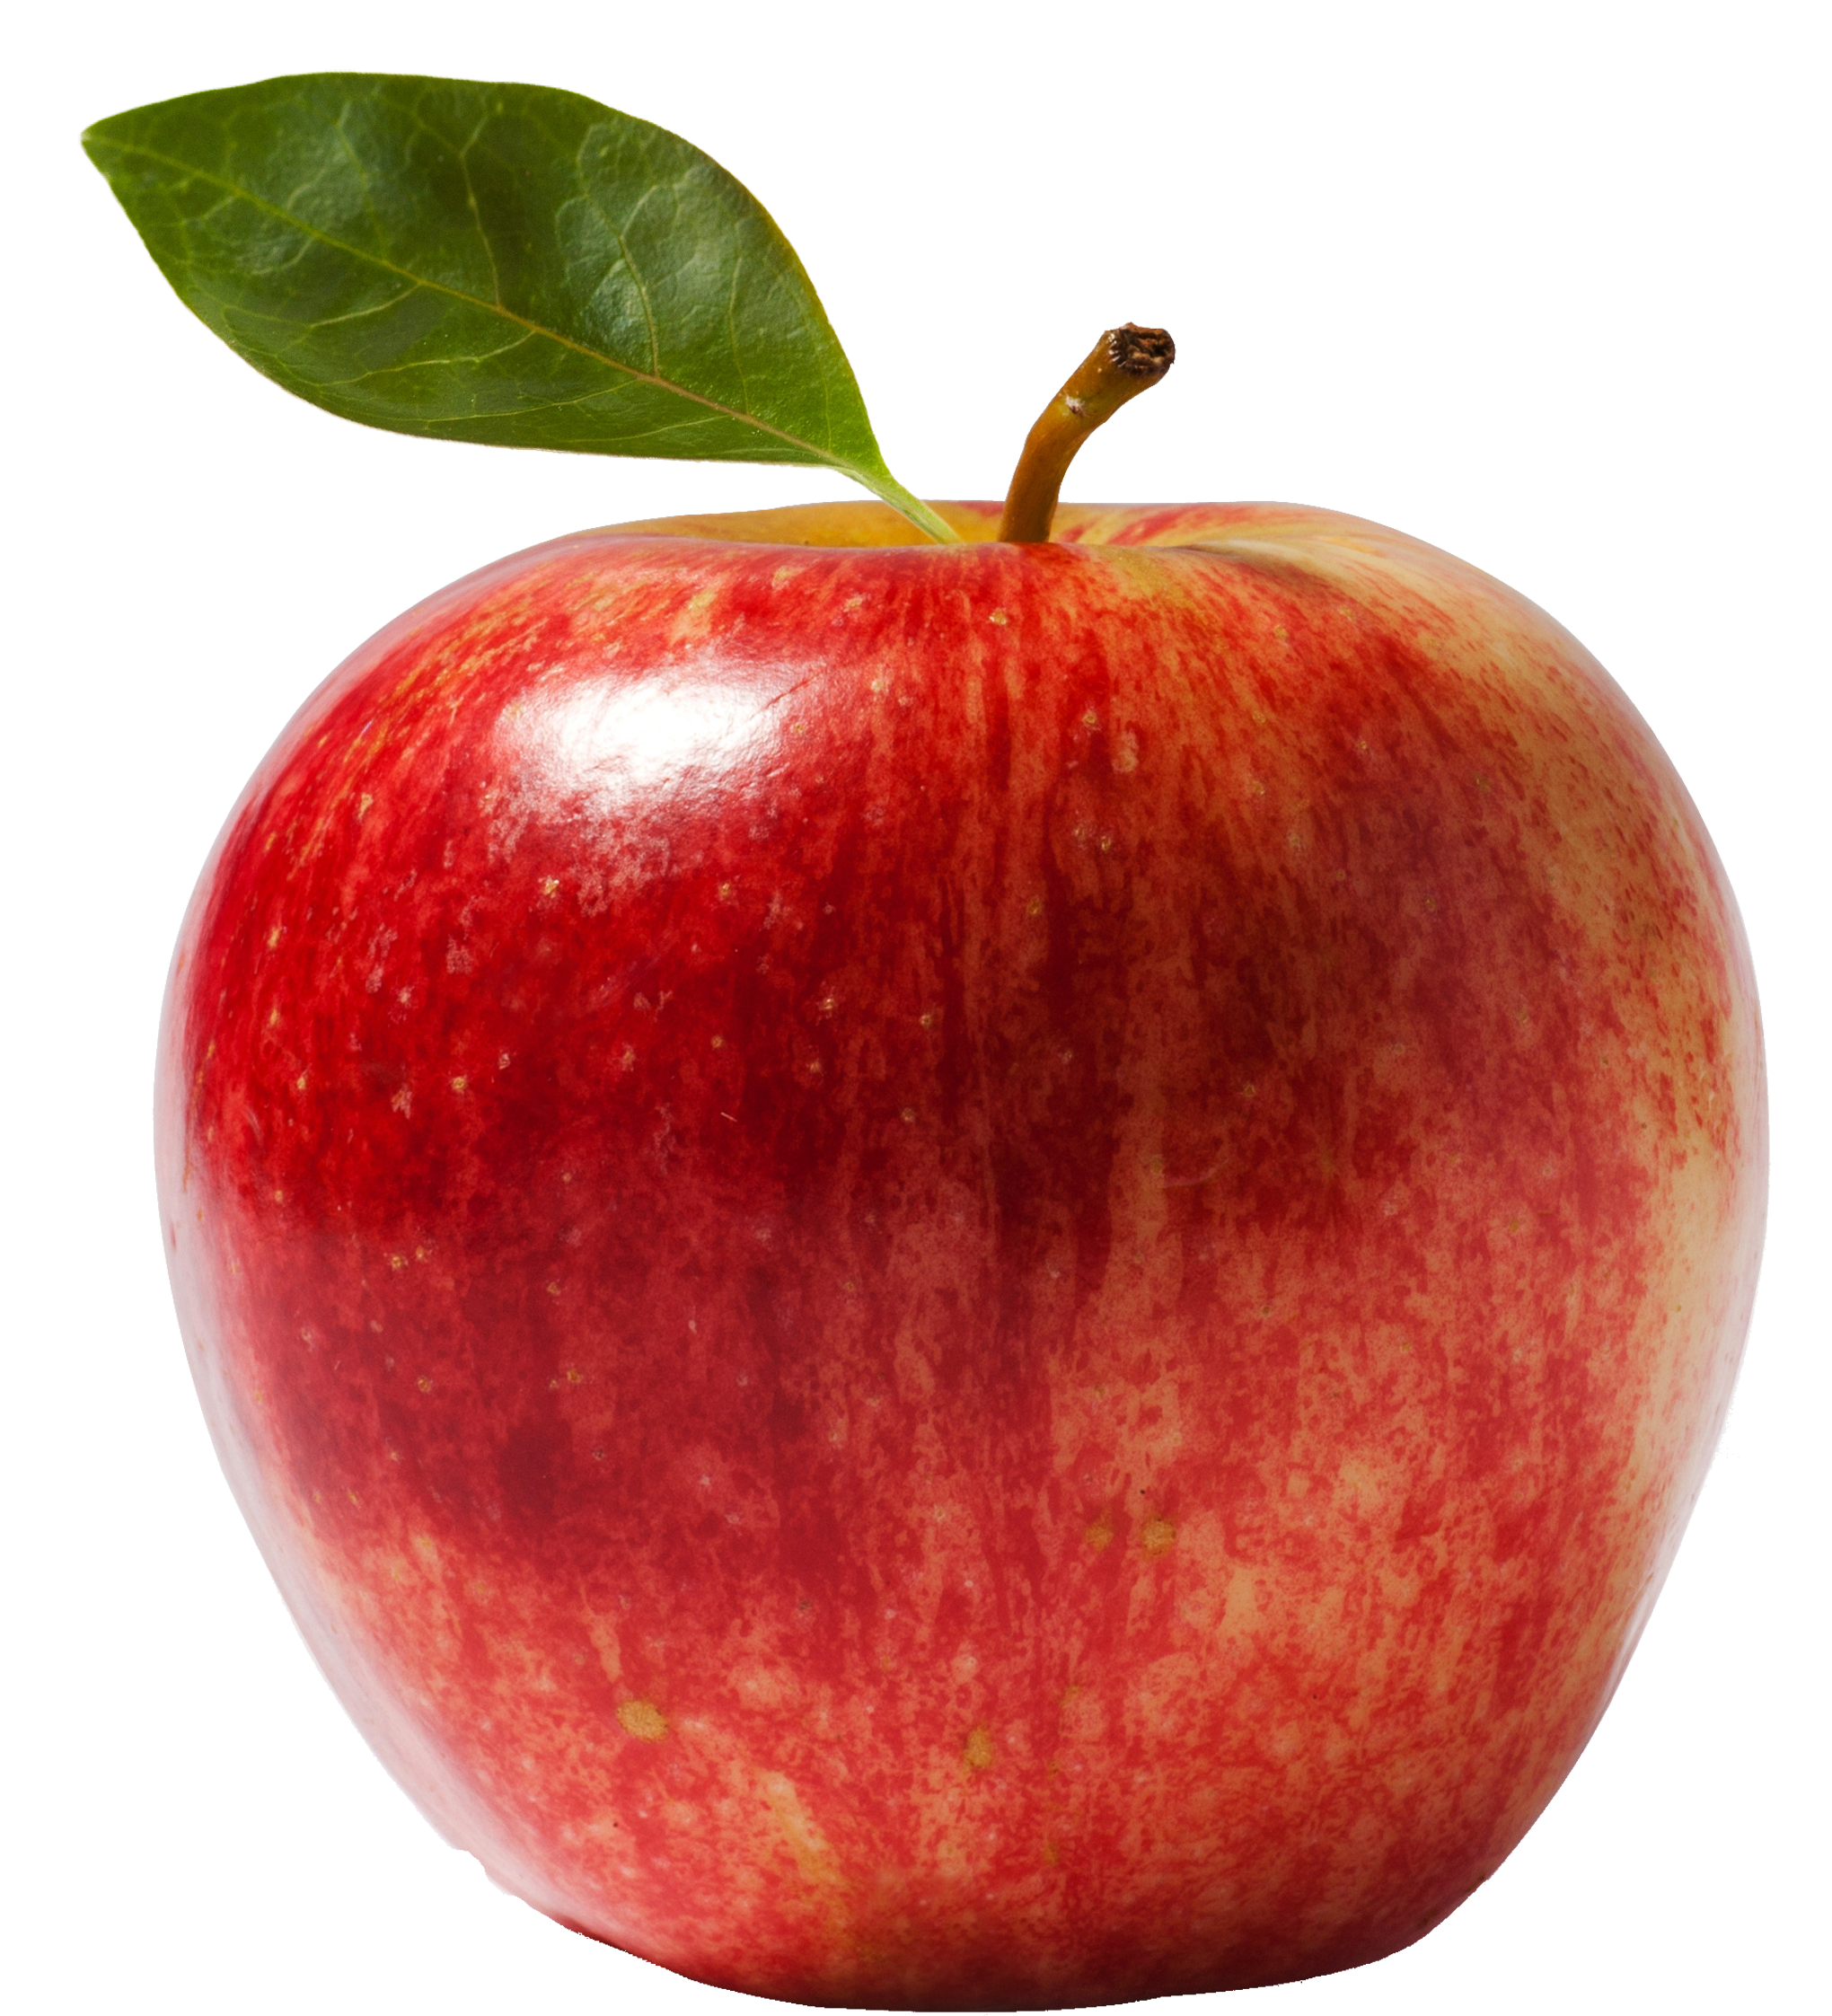 Apple Leaf Clipart